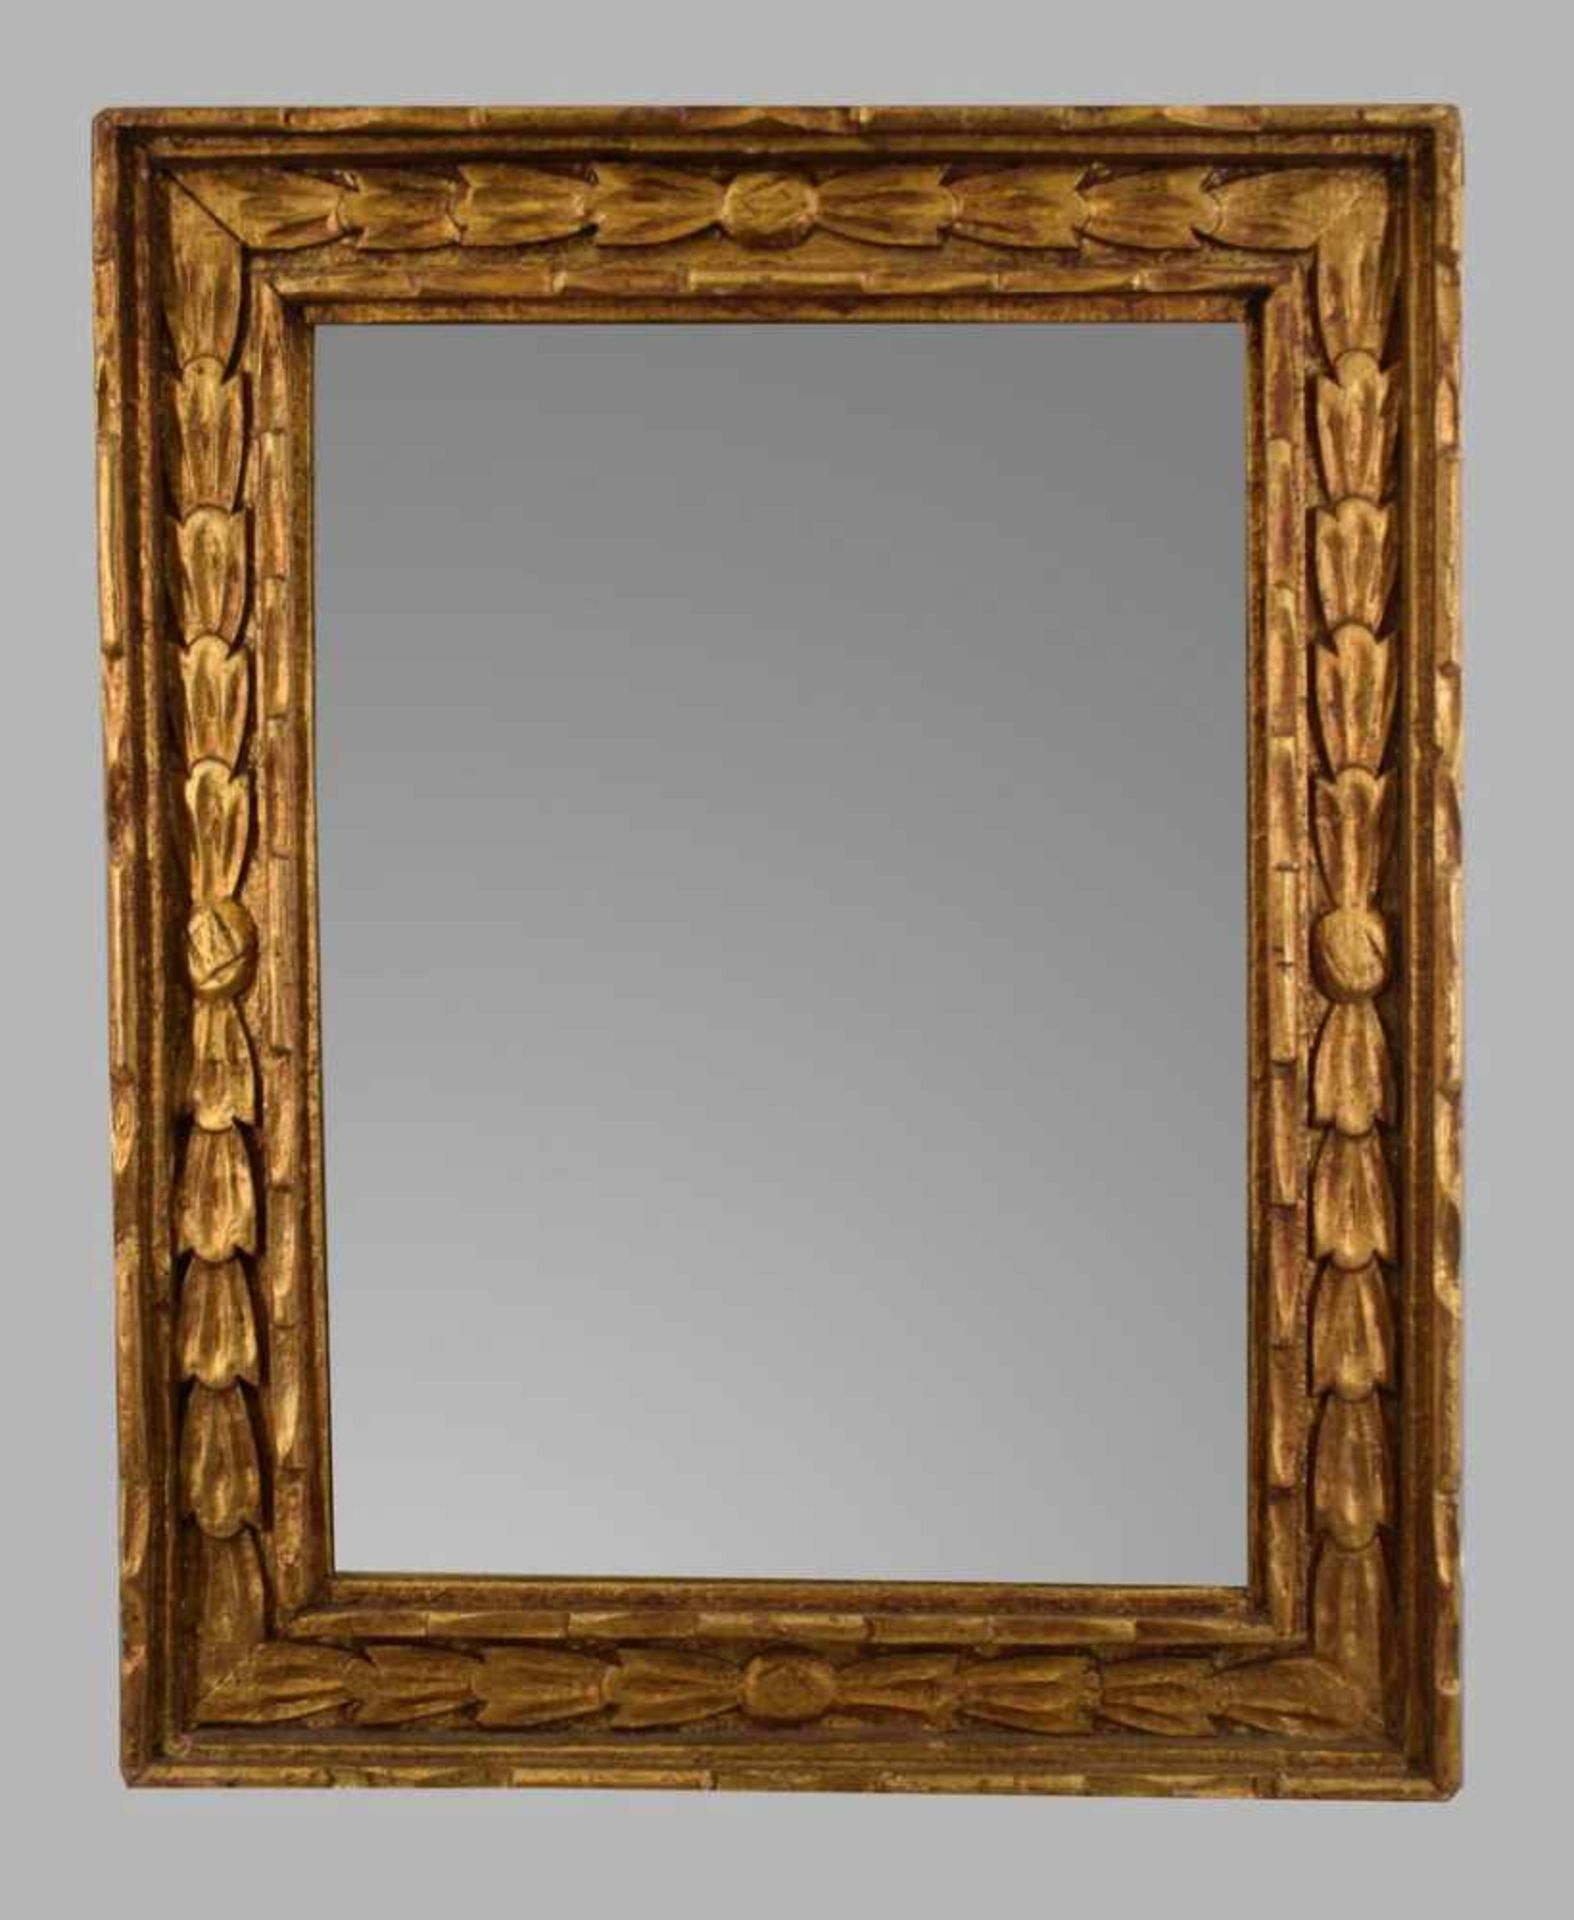 Spiegel Hartholz, geschnitzt, gold gefasst, 60 X 75 cm, 19. Jh.